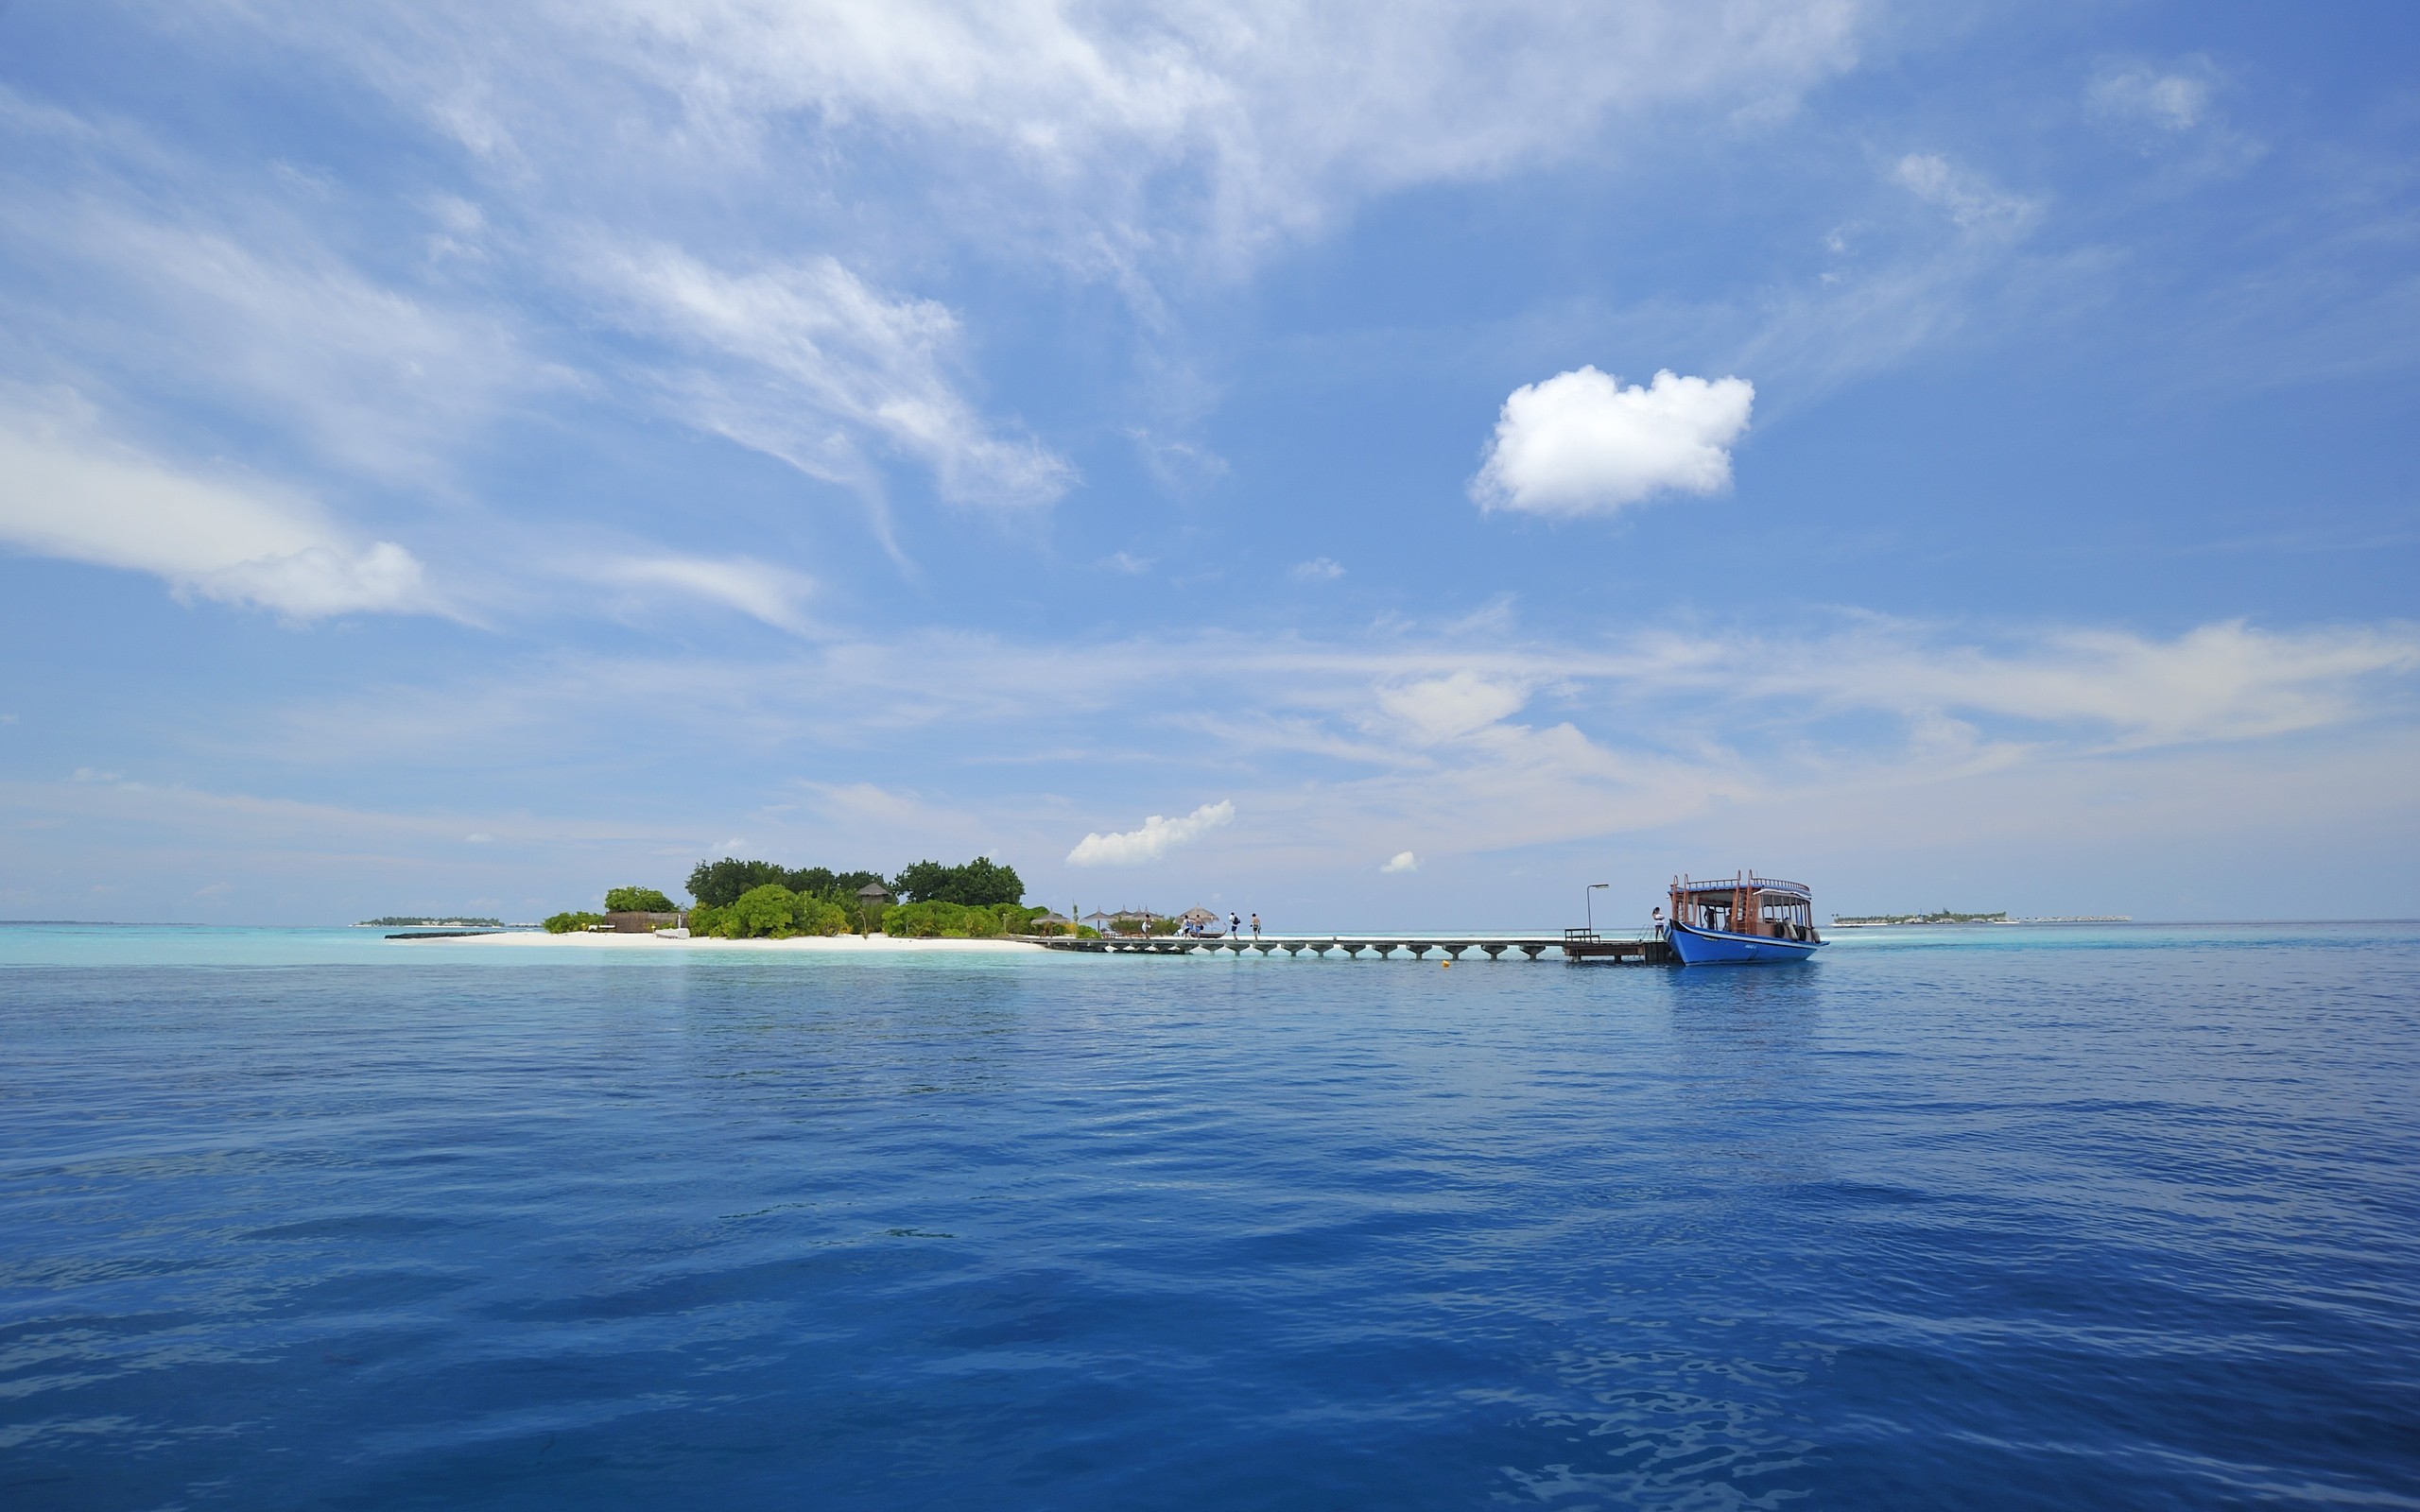 General 2560x1600 coast atols boat sea tropical nature vehicle water outdoors